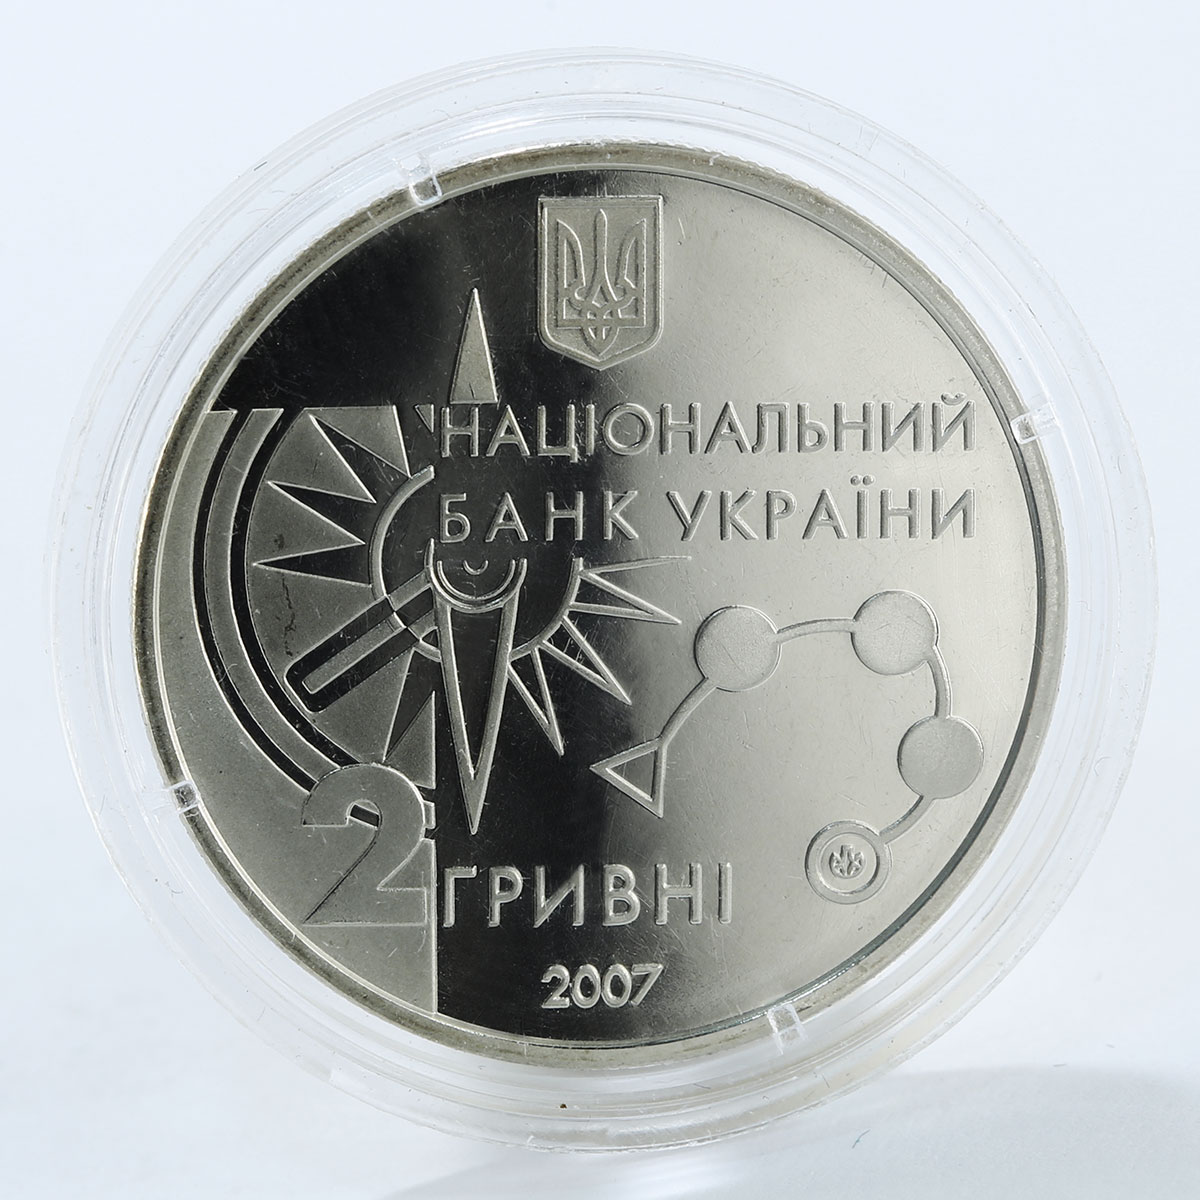 Ukraine 2 hryvnia Orienteering sport foot navigation compass nickel coin 2007